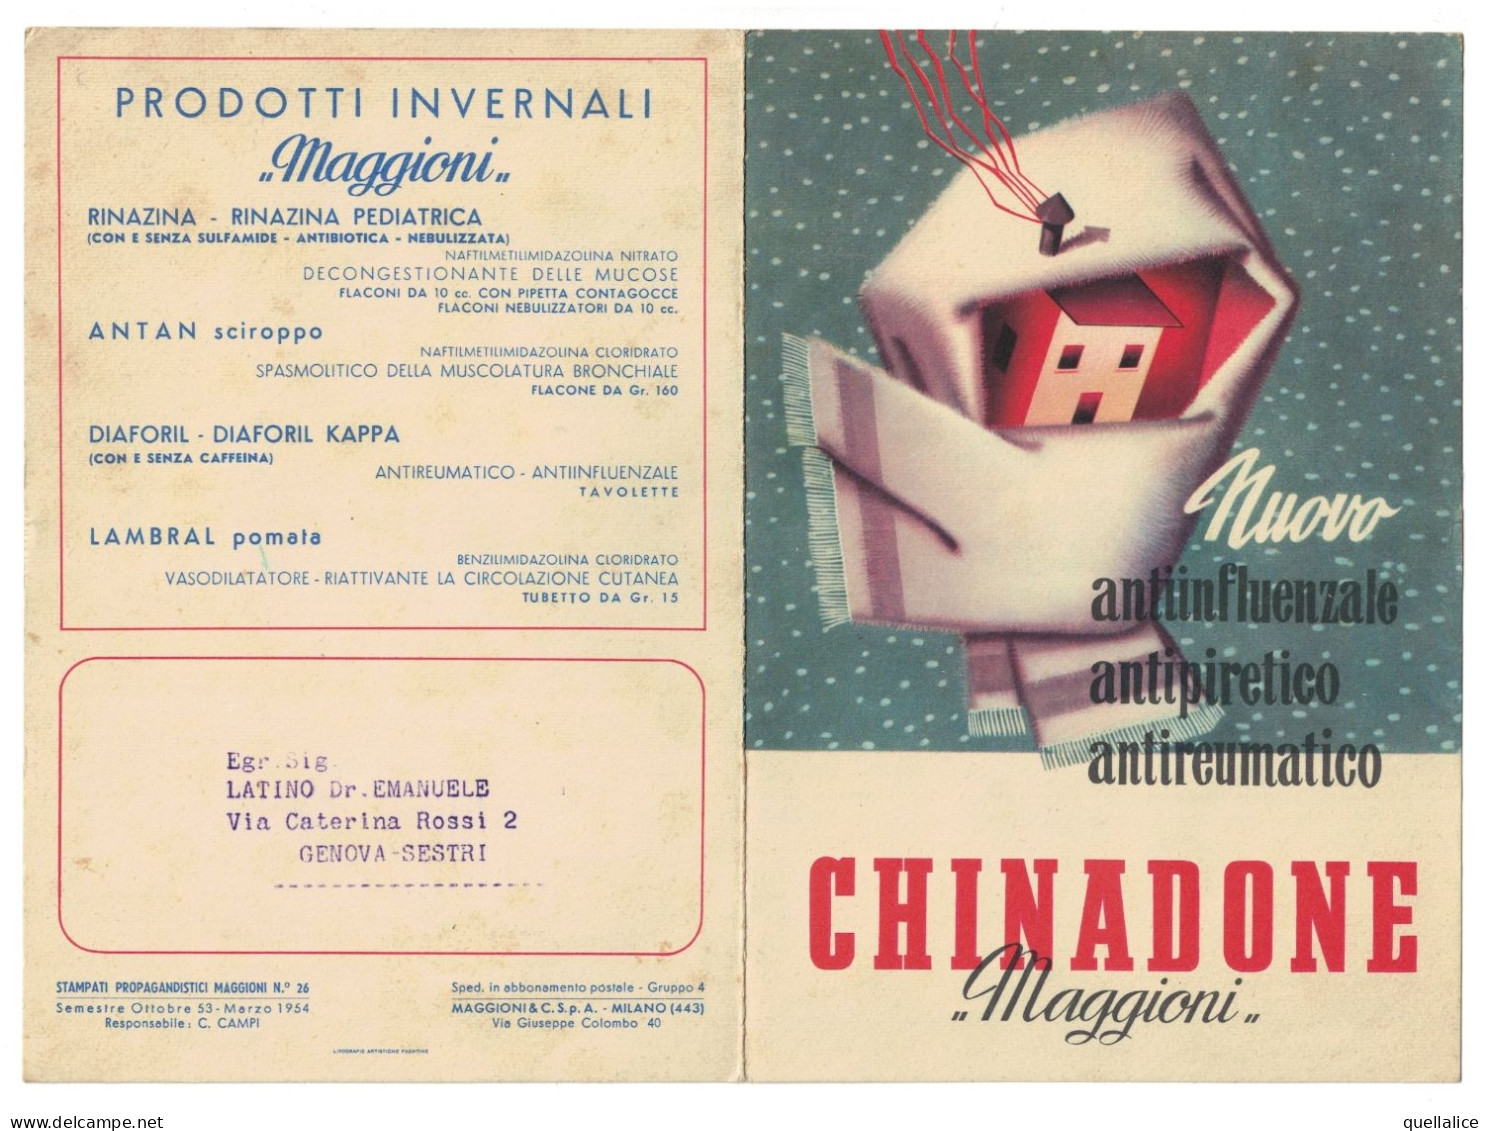 03916 "CHINADONE - MAGGIONI & C. S.PA. - NUOVO ANTIINFLUENZALE, ANTIPIRETICO, ANTIREUMATICO" PUBBL. 1954 - Werbung